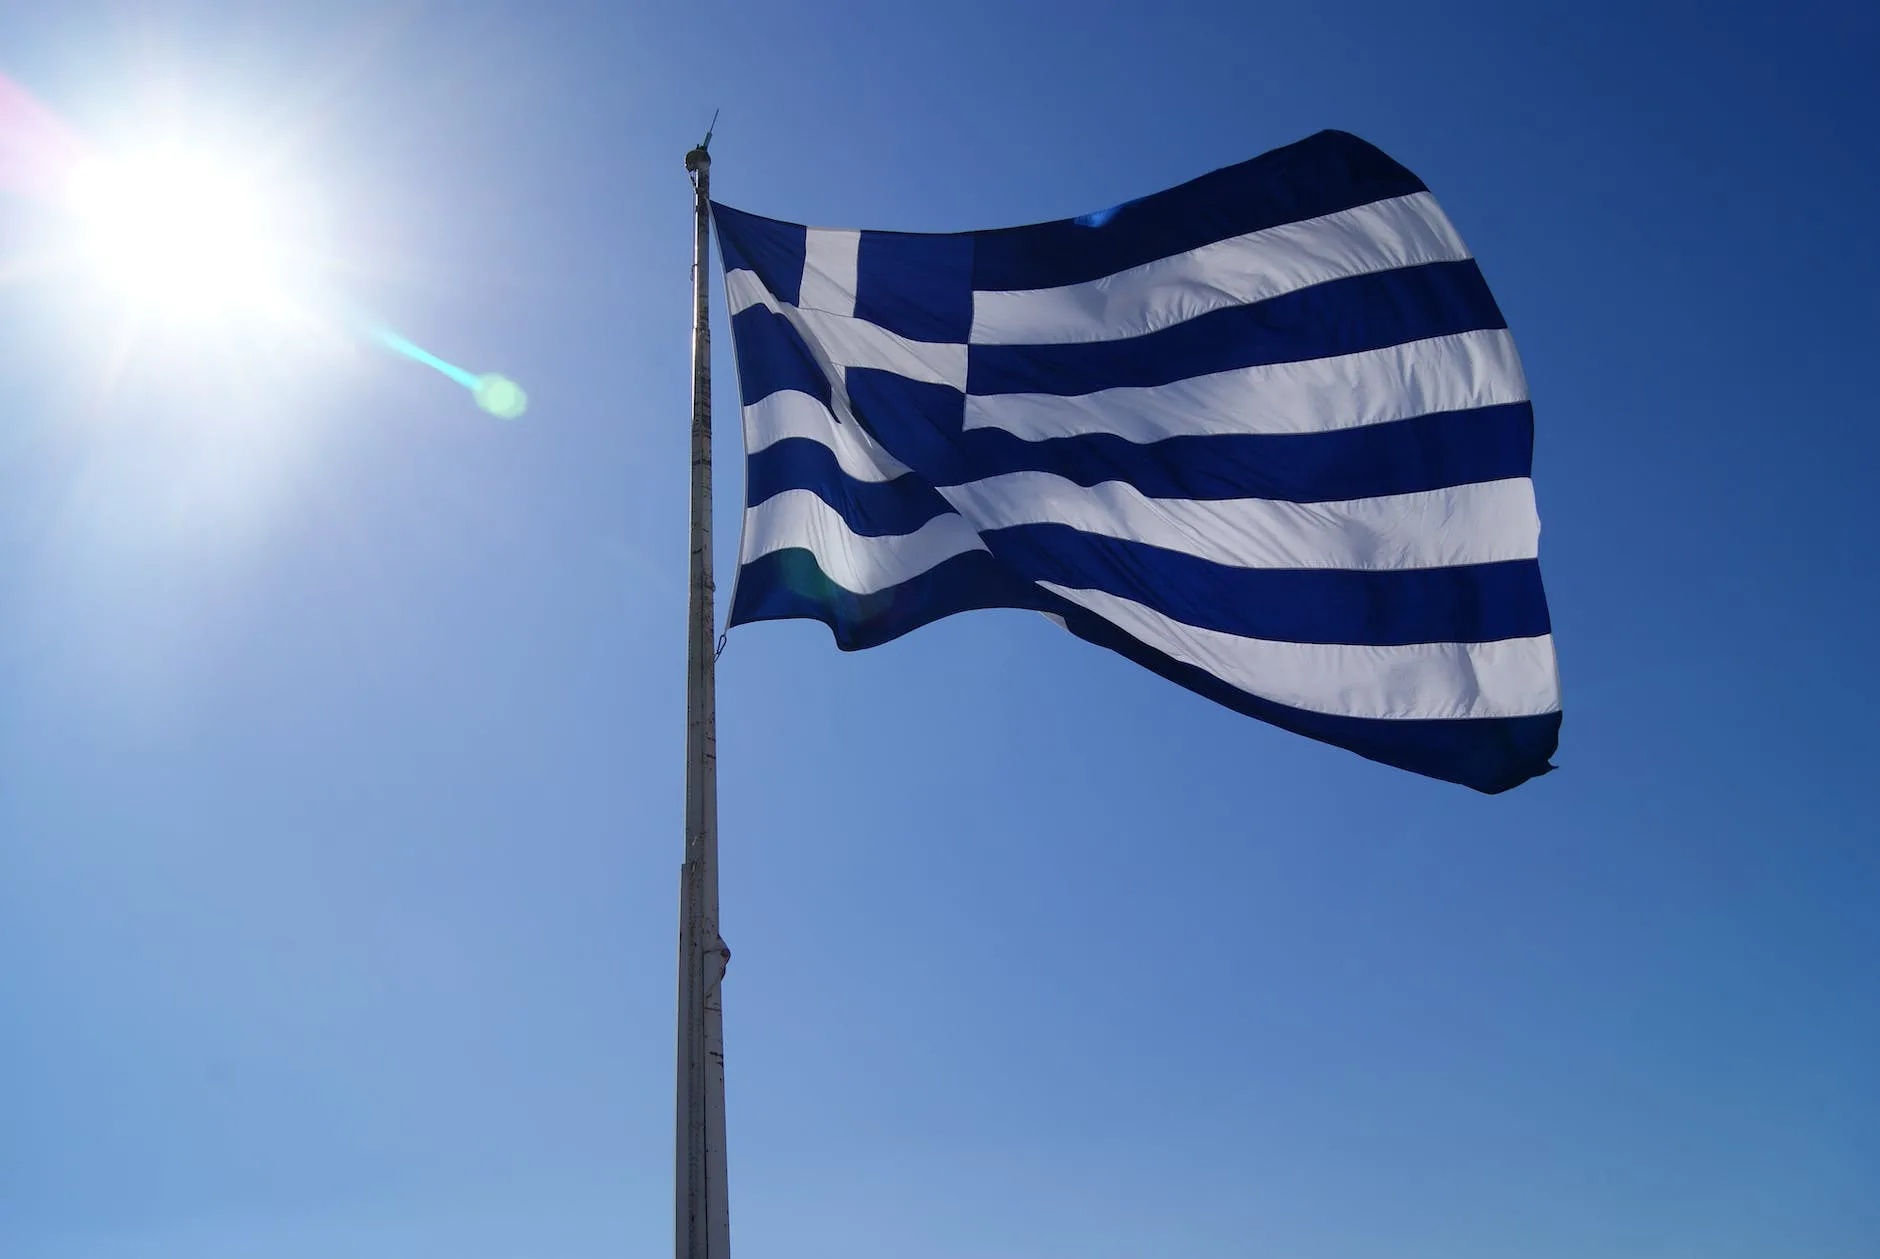 flag of greece